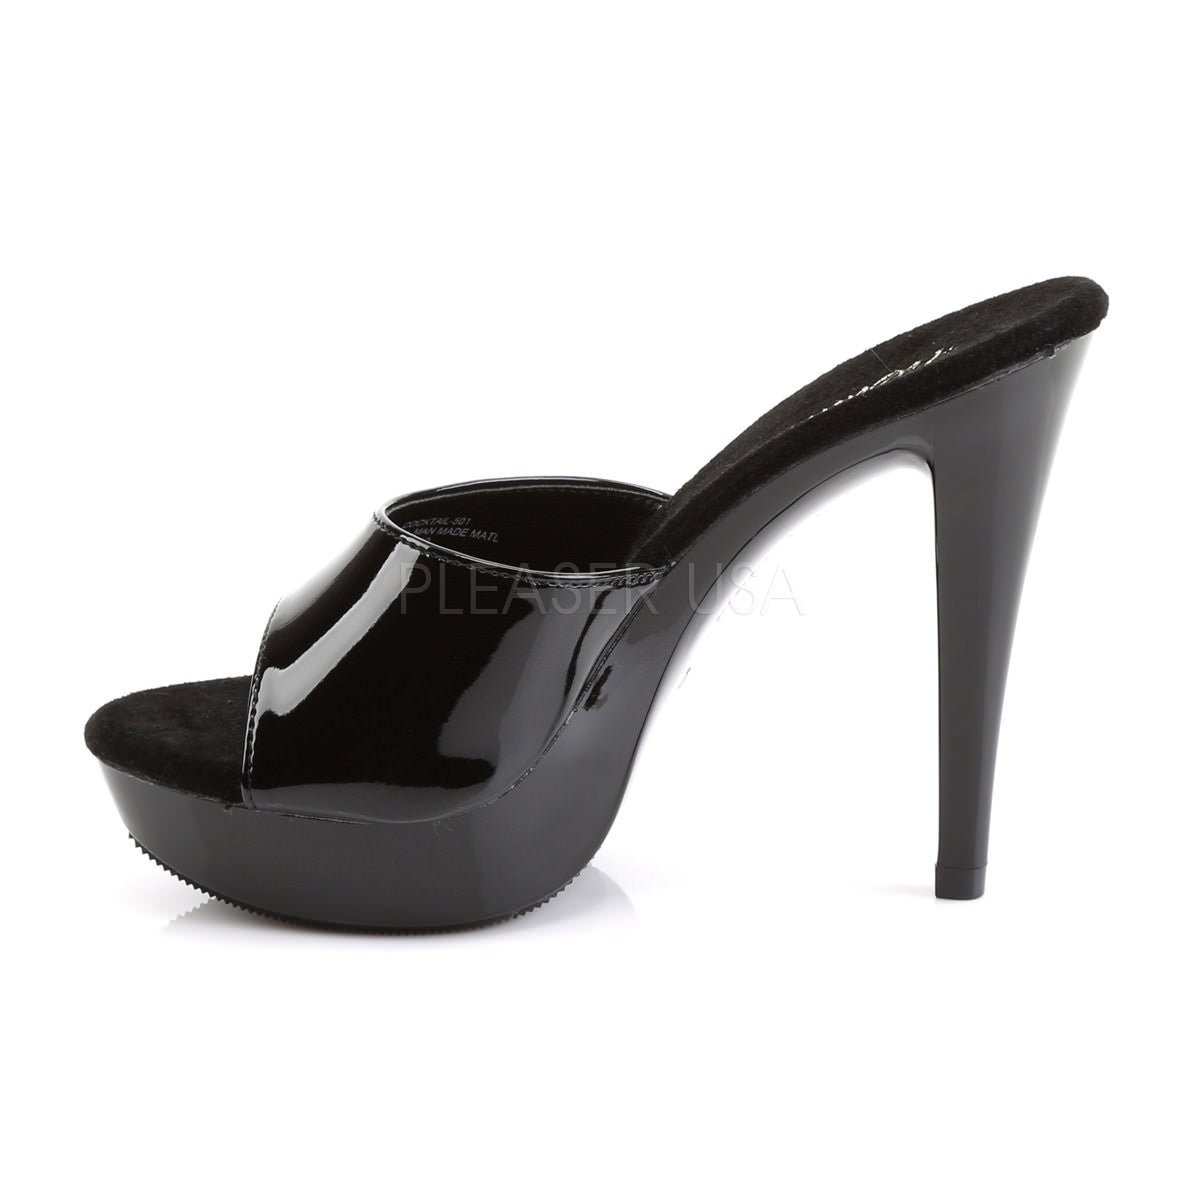 5 Inch Heel Black Platform Slides | FABULICIOUS COCKTAIL-501 – Shoecup.com